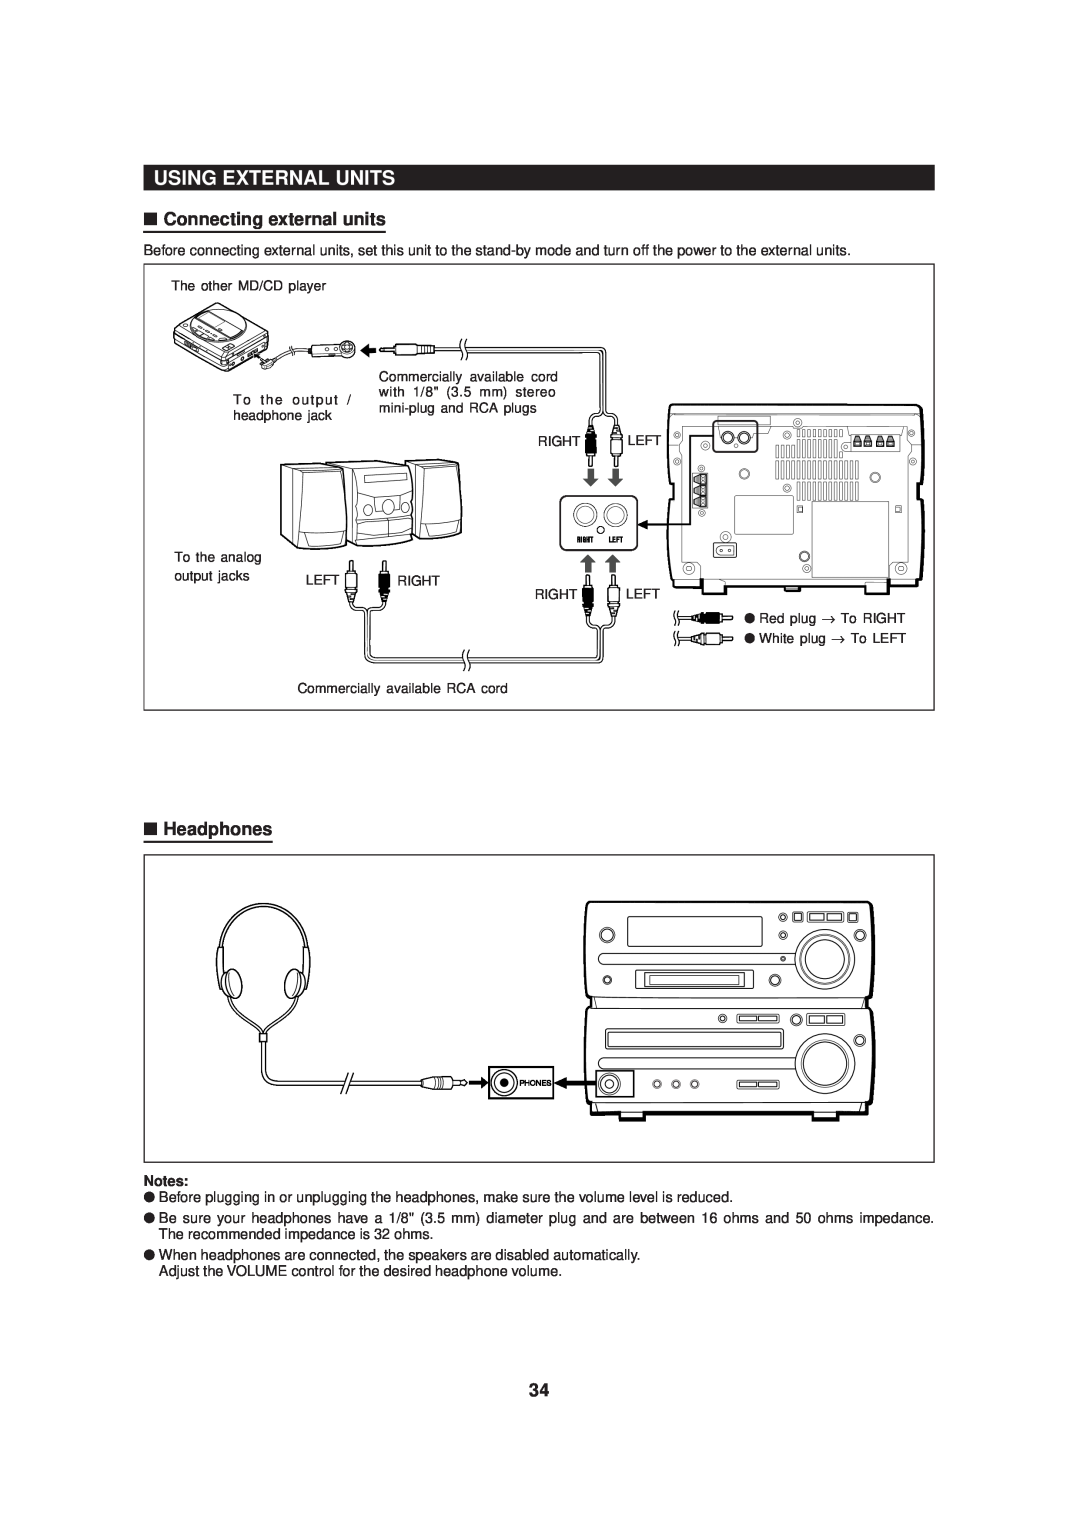 Sharp MD-MX20 operation manual Using External Units, Connecting external units, Headphones 